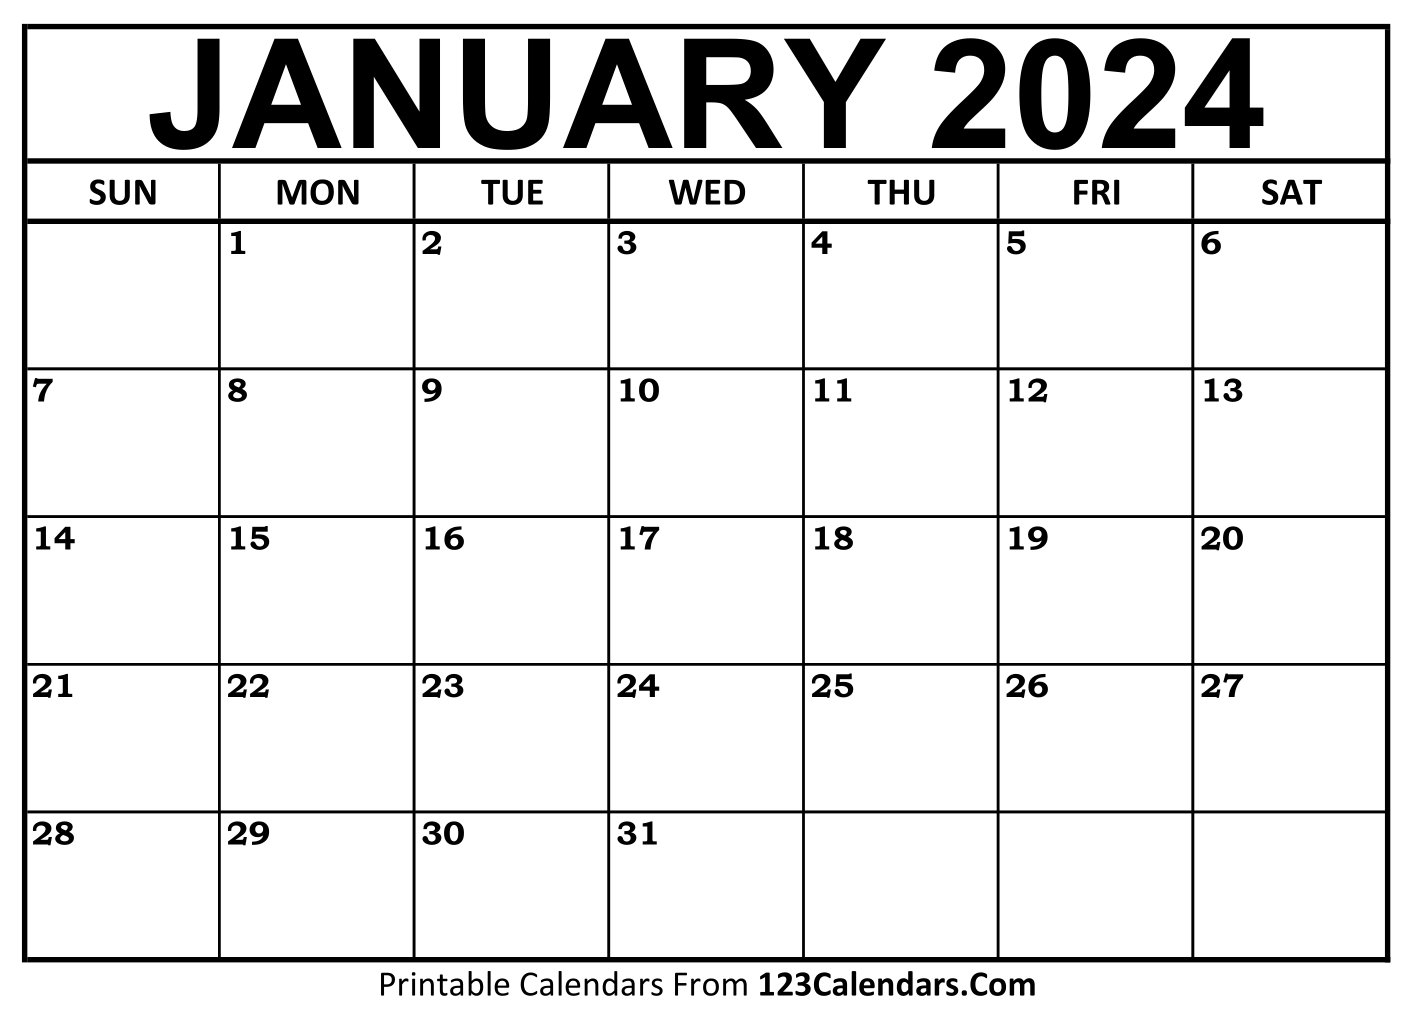 Printable January 2024 Calendar Templates - 123Calendars for January 2024 Printable Calendar Page